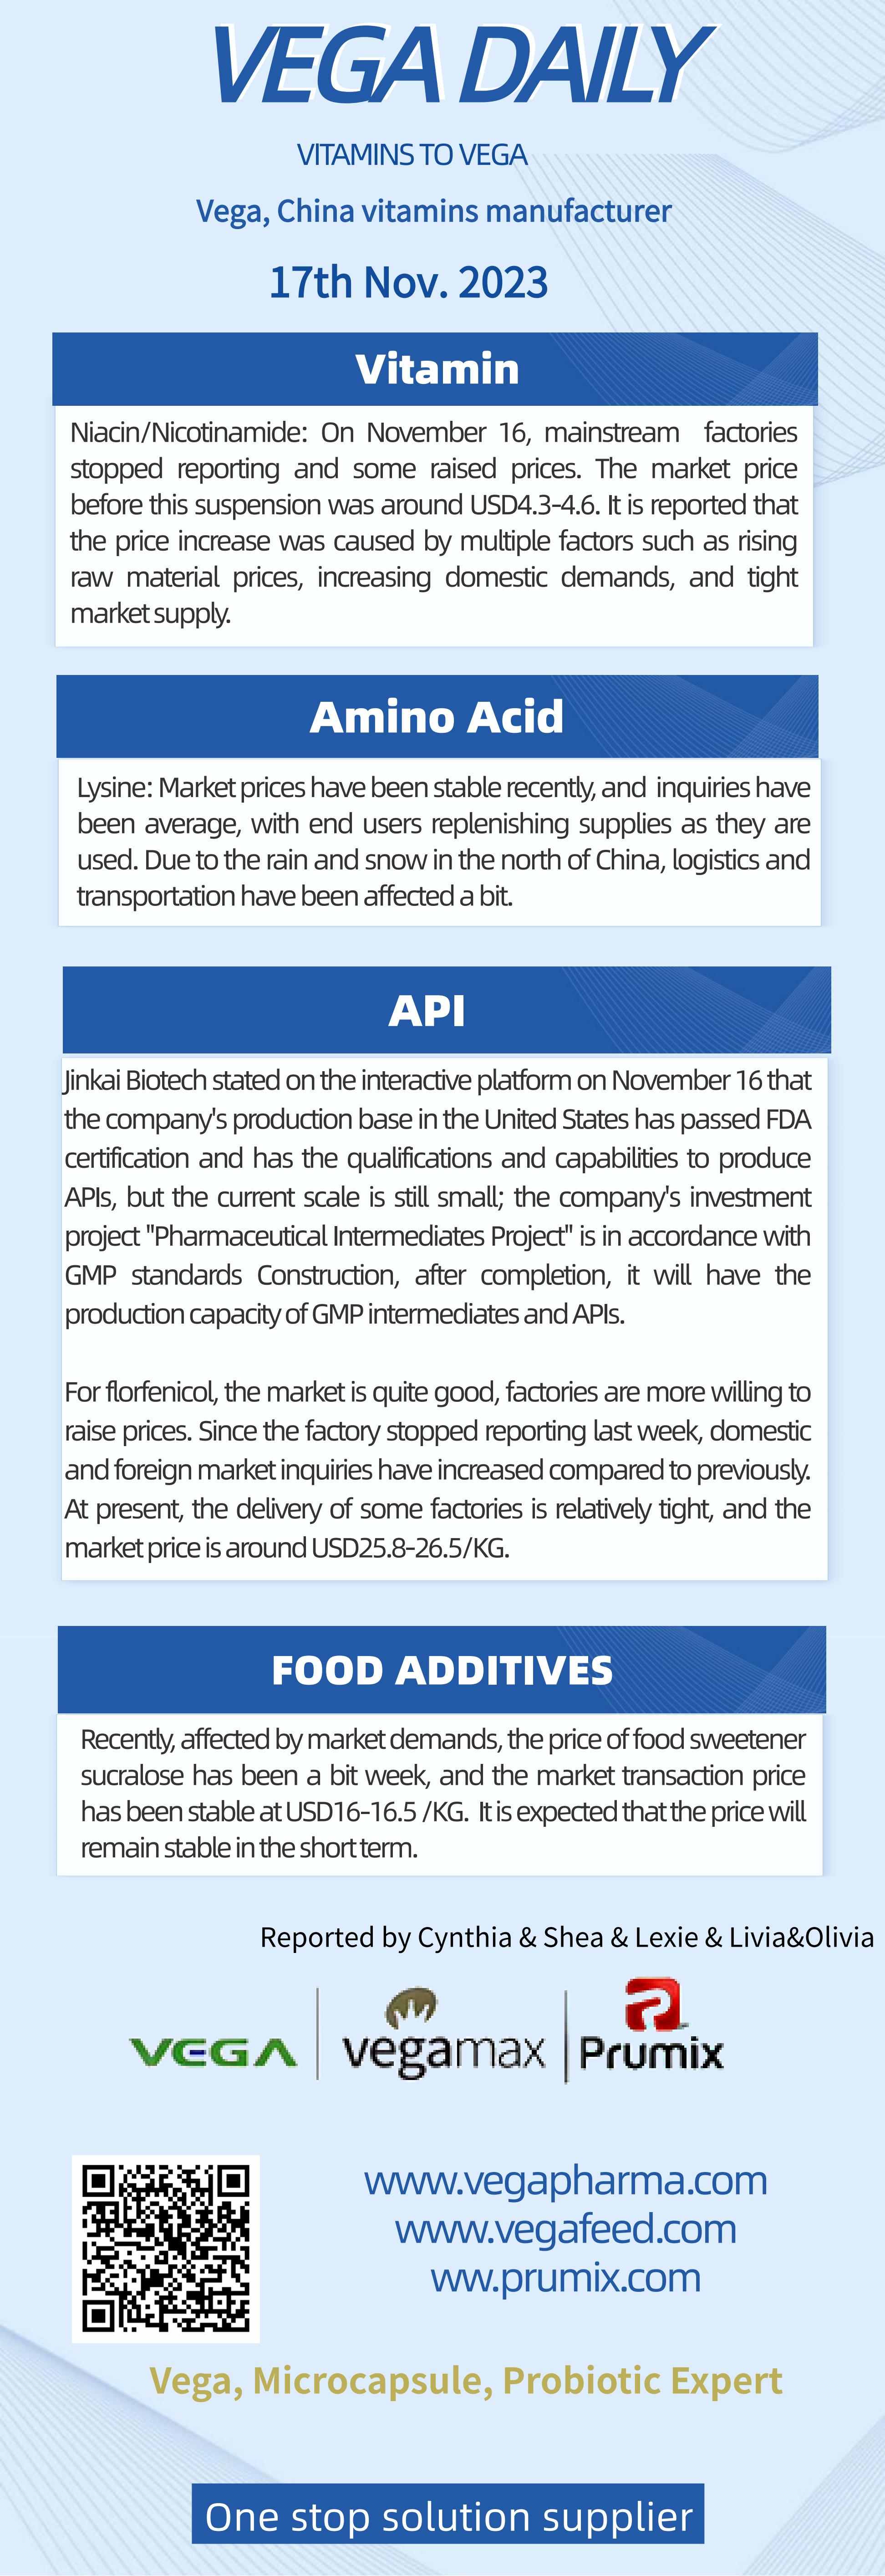 Vega Daily Dated on Nov 17th 2023 Vitamin Amino Acid API Food Additives.jpg